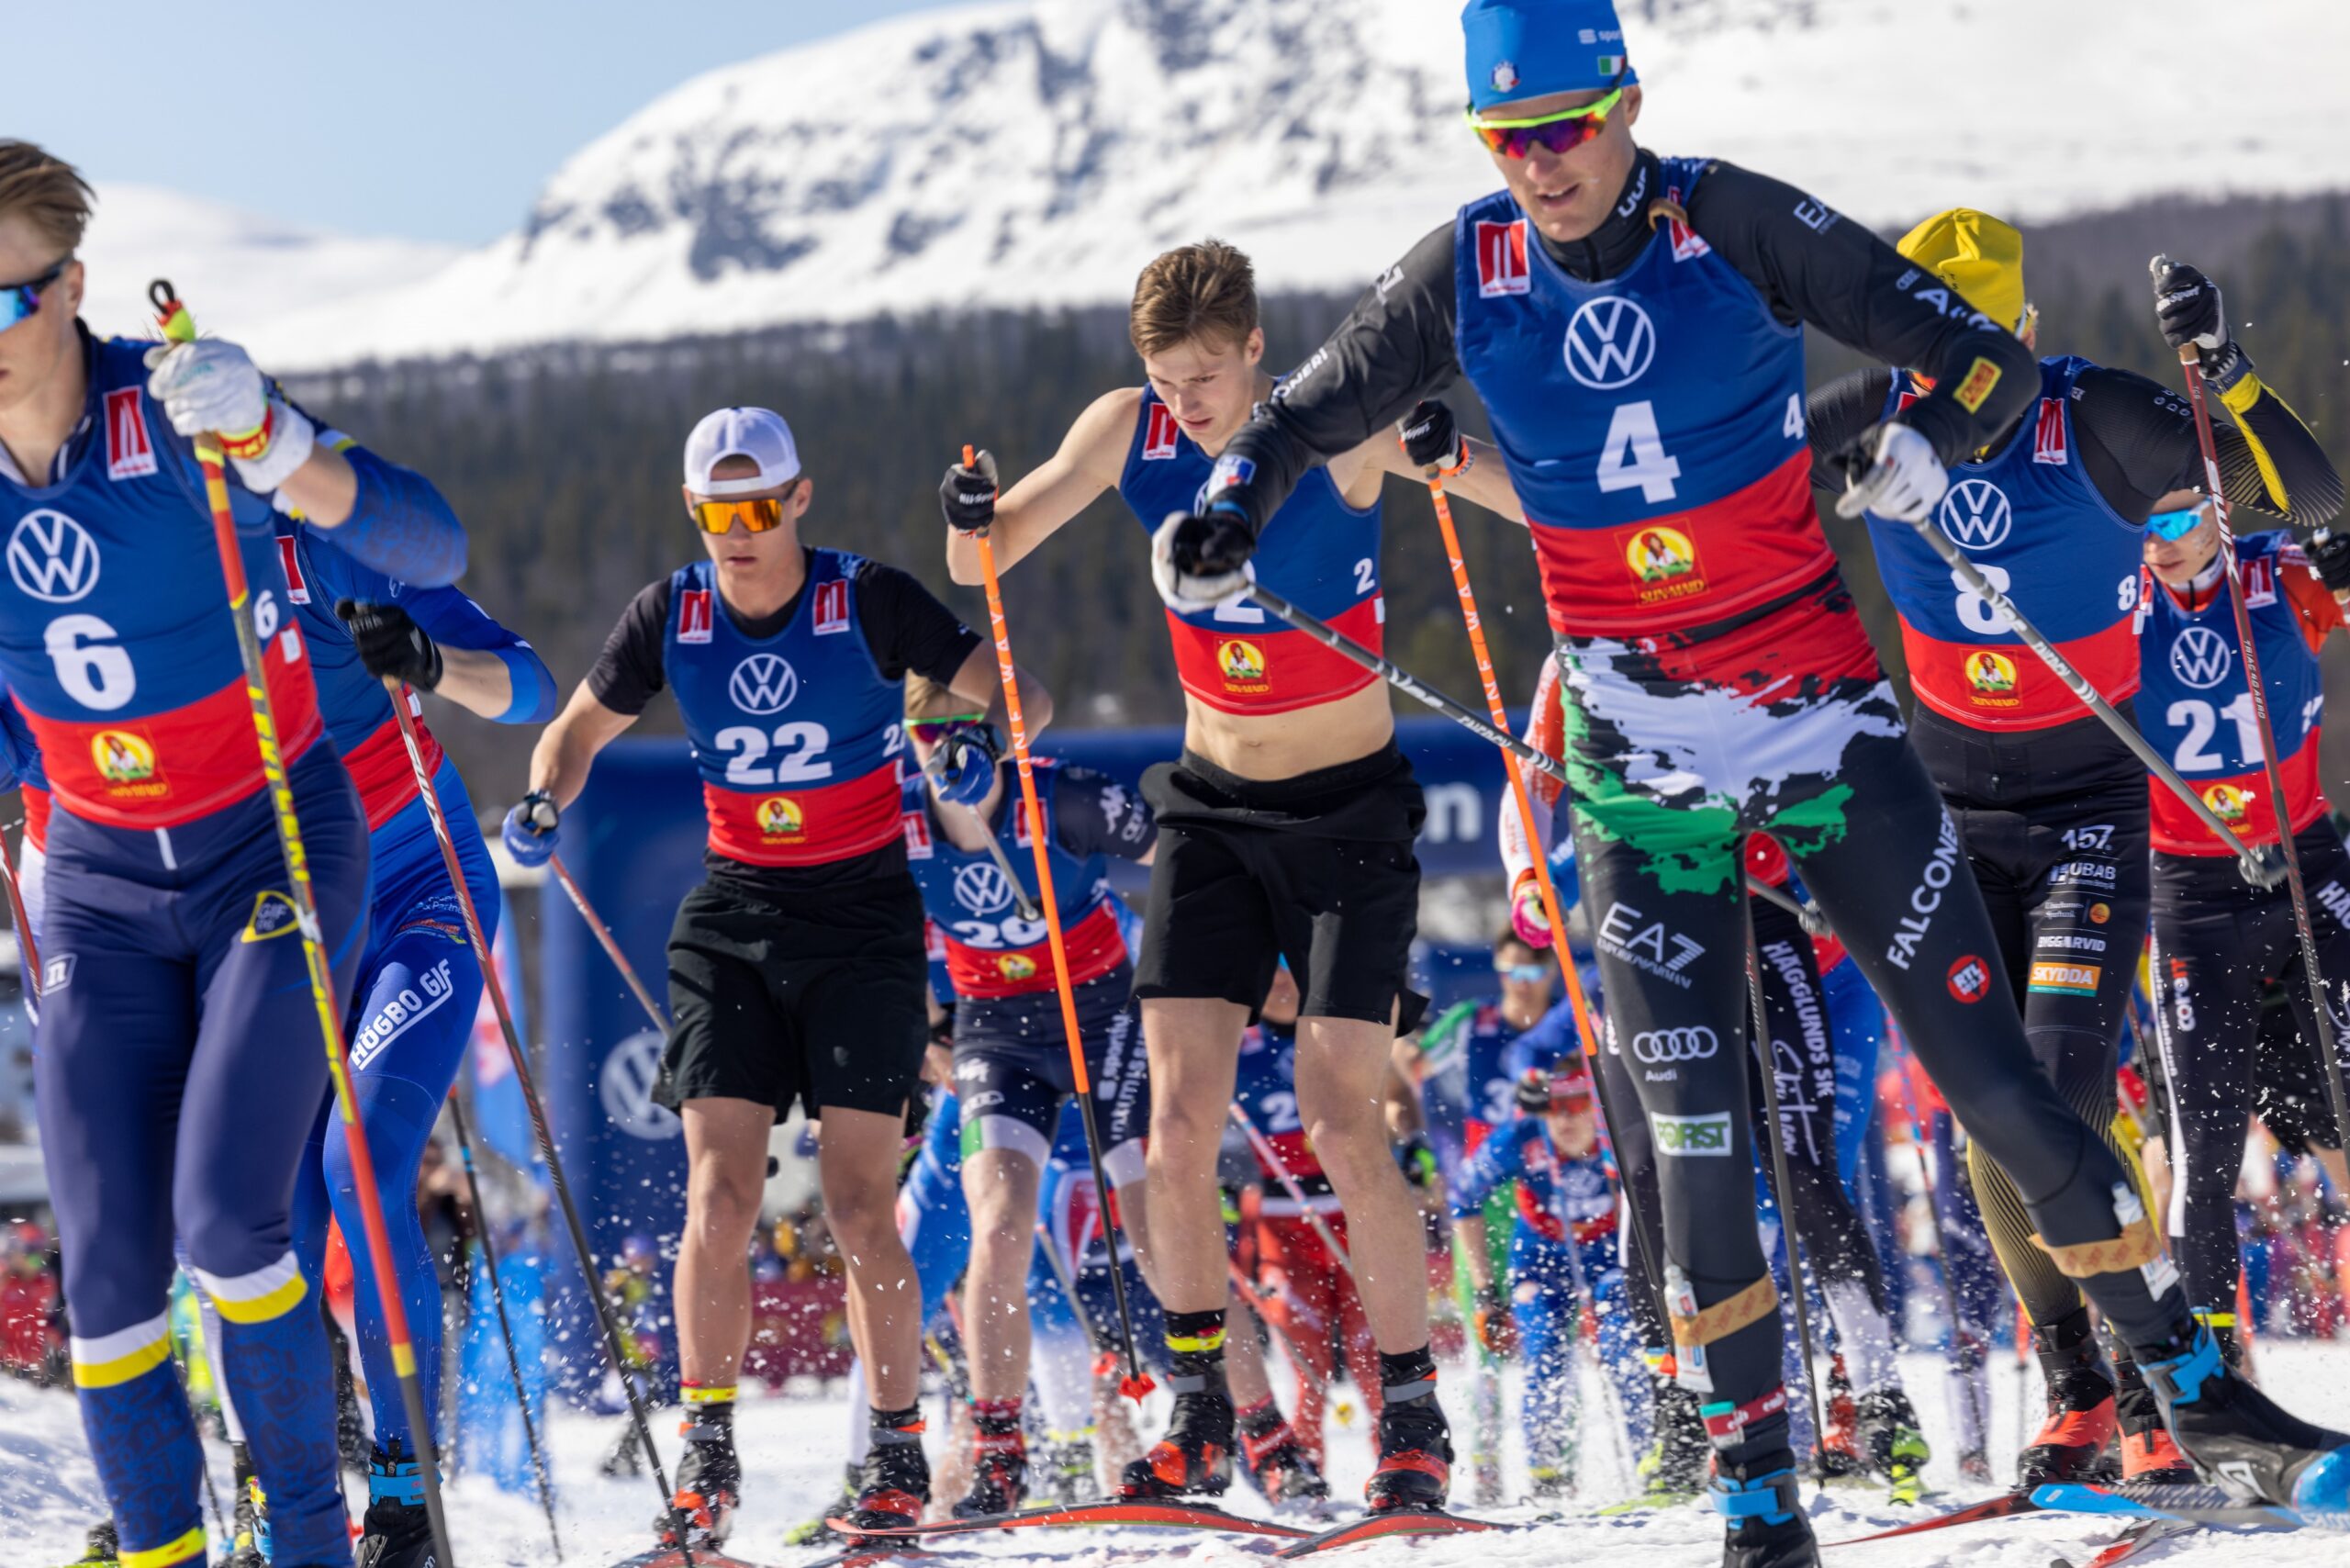 Fjälltopploppet: Start Lists and Where to Watch – Ski Classics